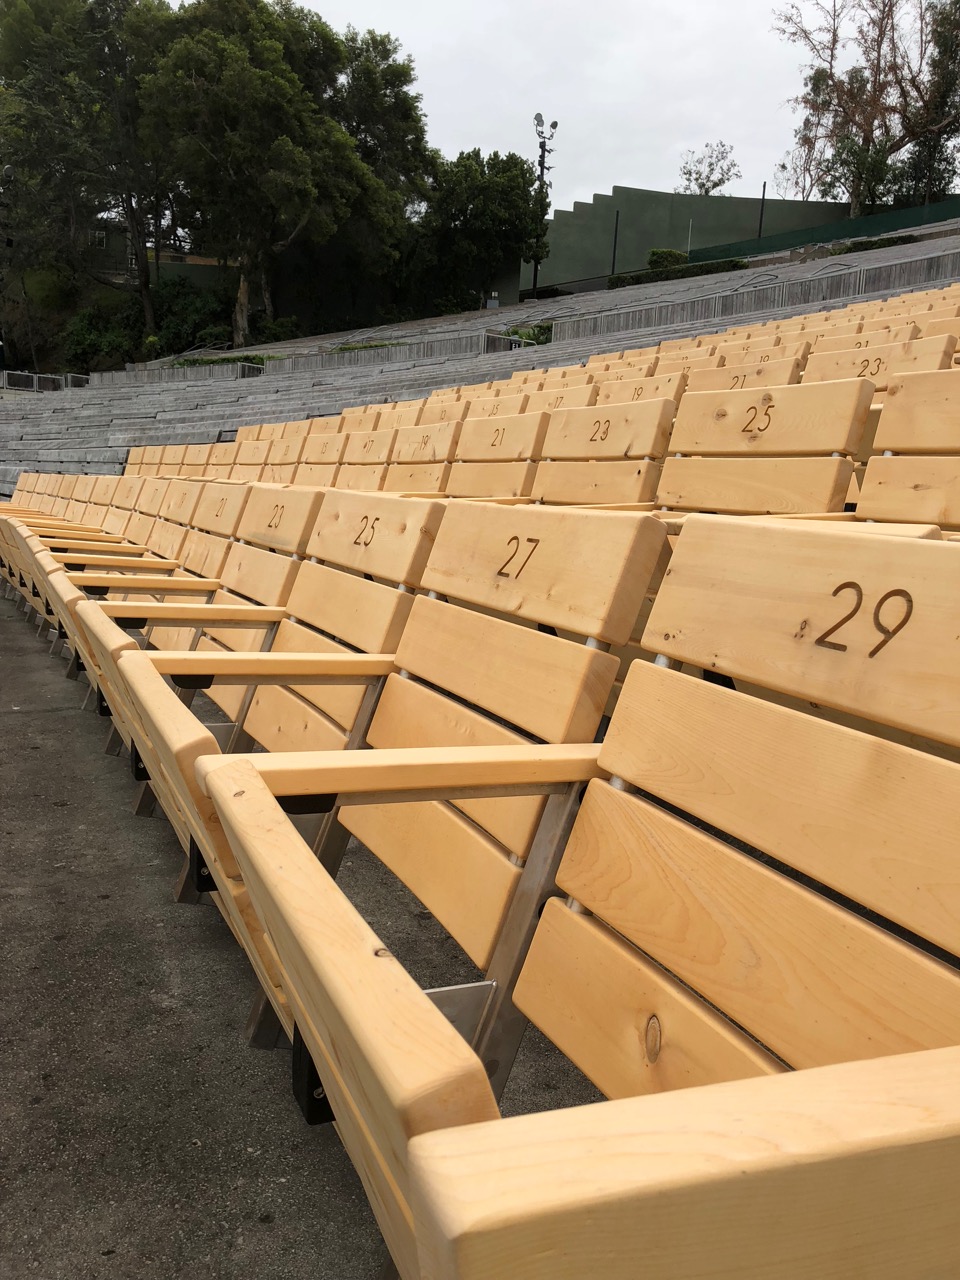 New Hollywood Bowl Super Seats